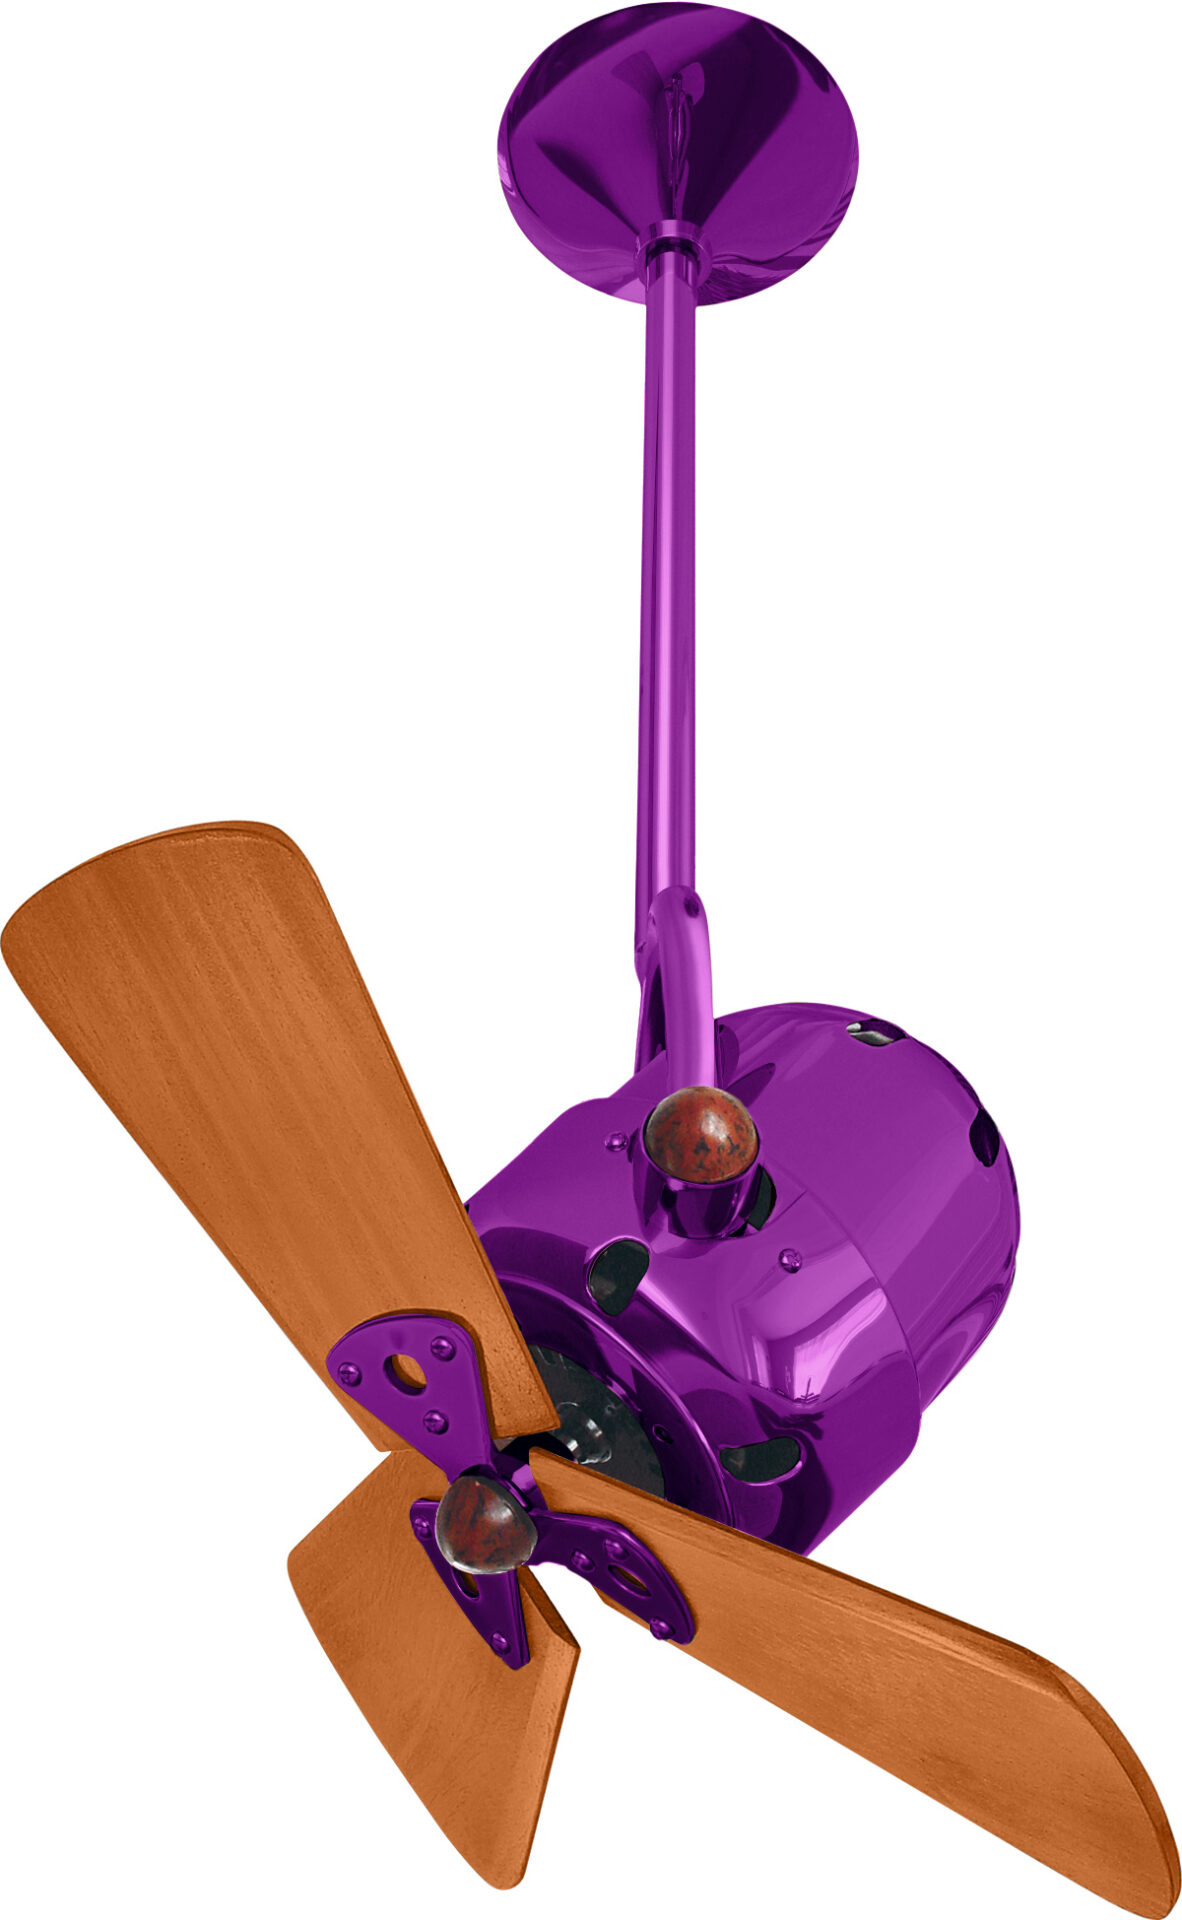 Bianca Direcional ceiling fan in Light Purple / Ametista with mahogany wood blades by Matthews Fan Company.